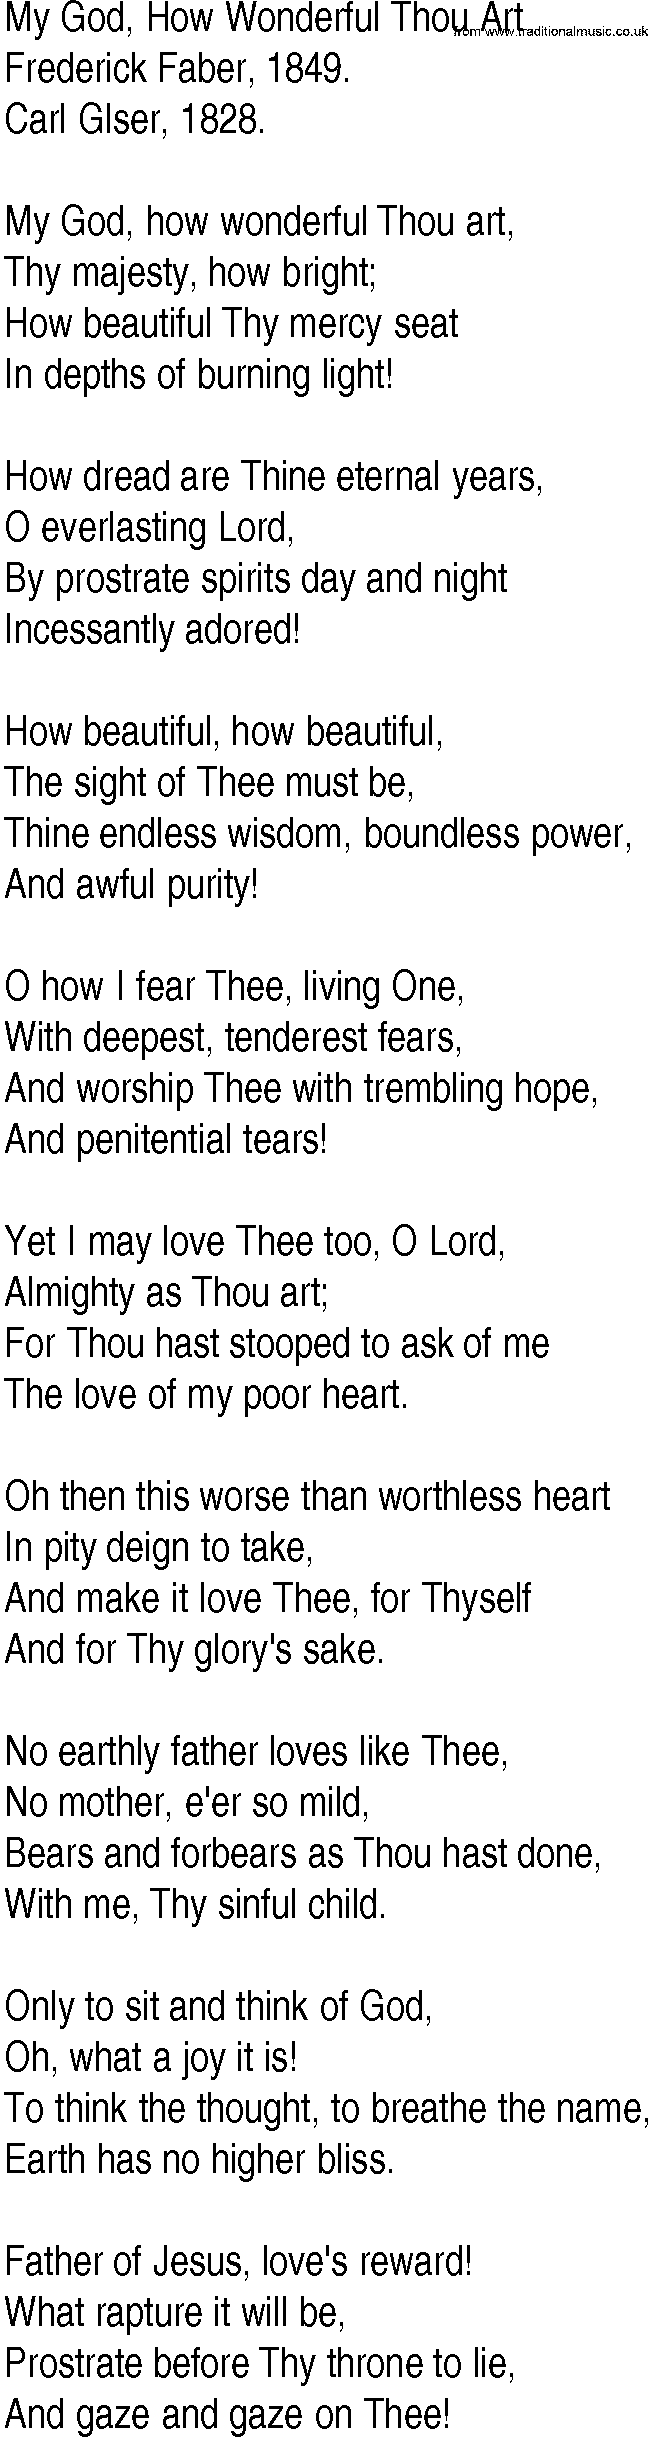 Hymn and Gospel Song: My God, How Wonderful Thou Art by Frederick Faber lyrics